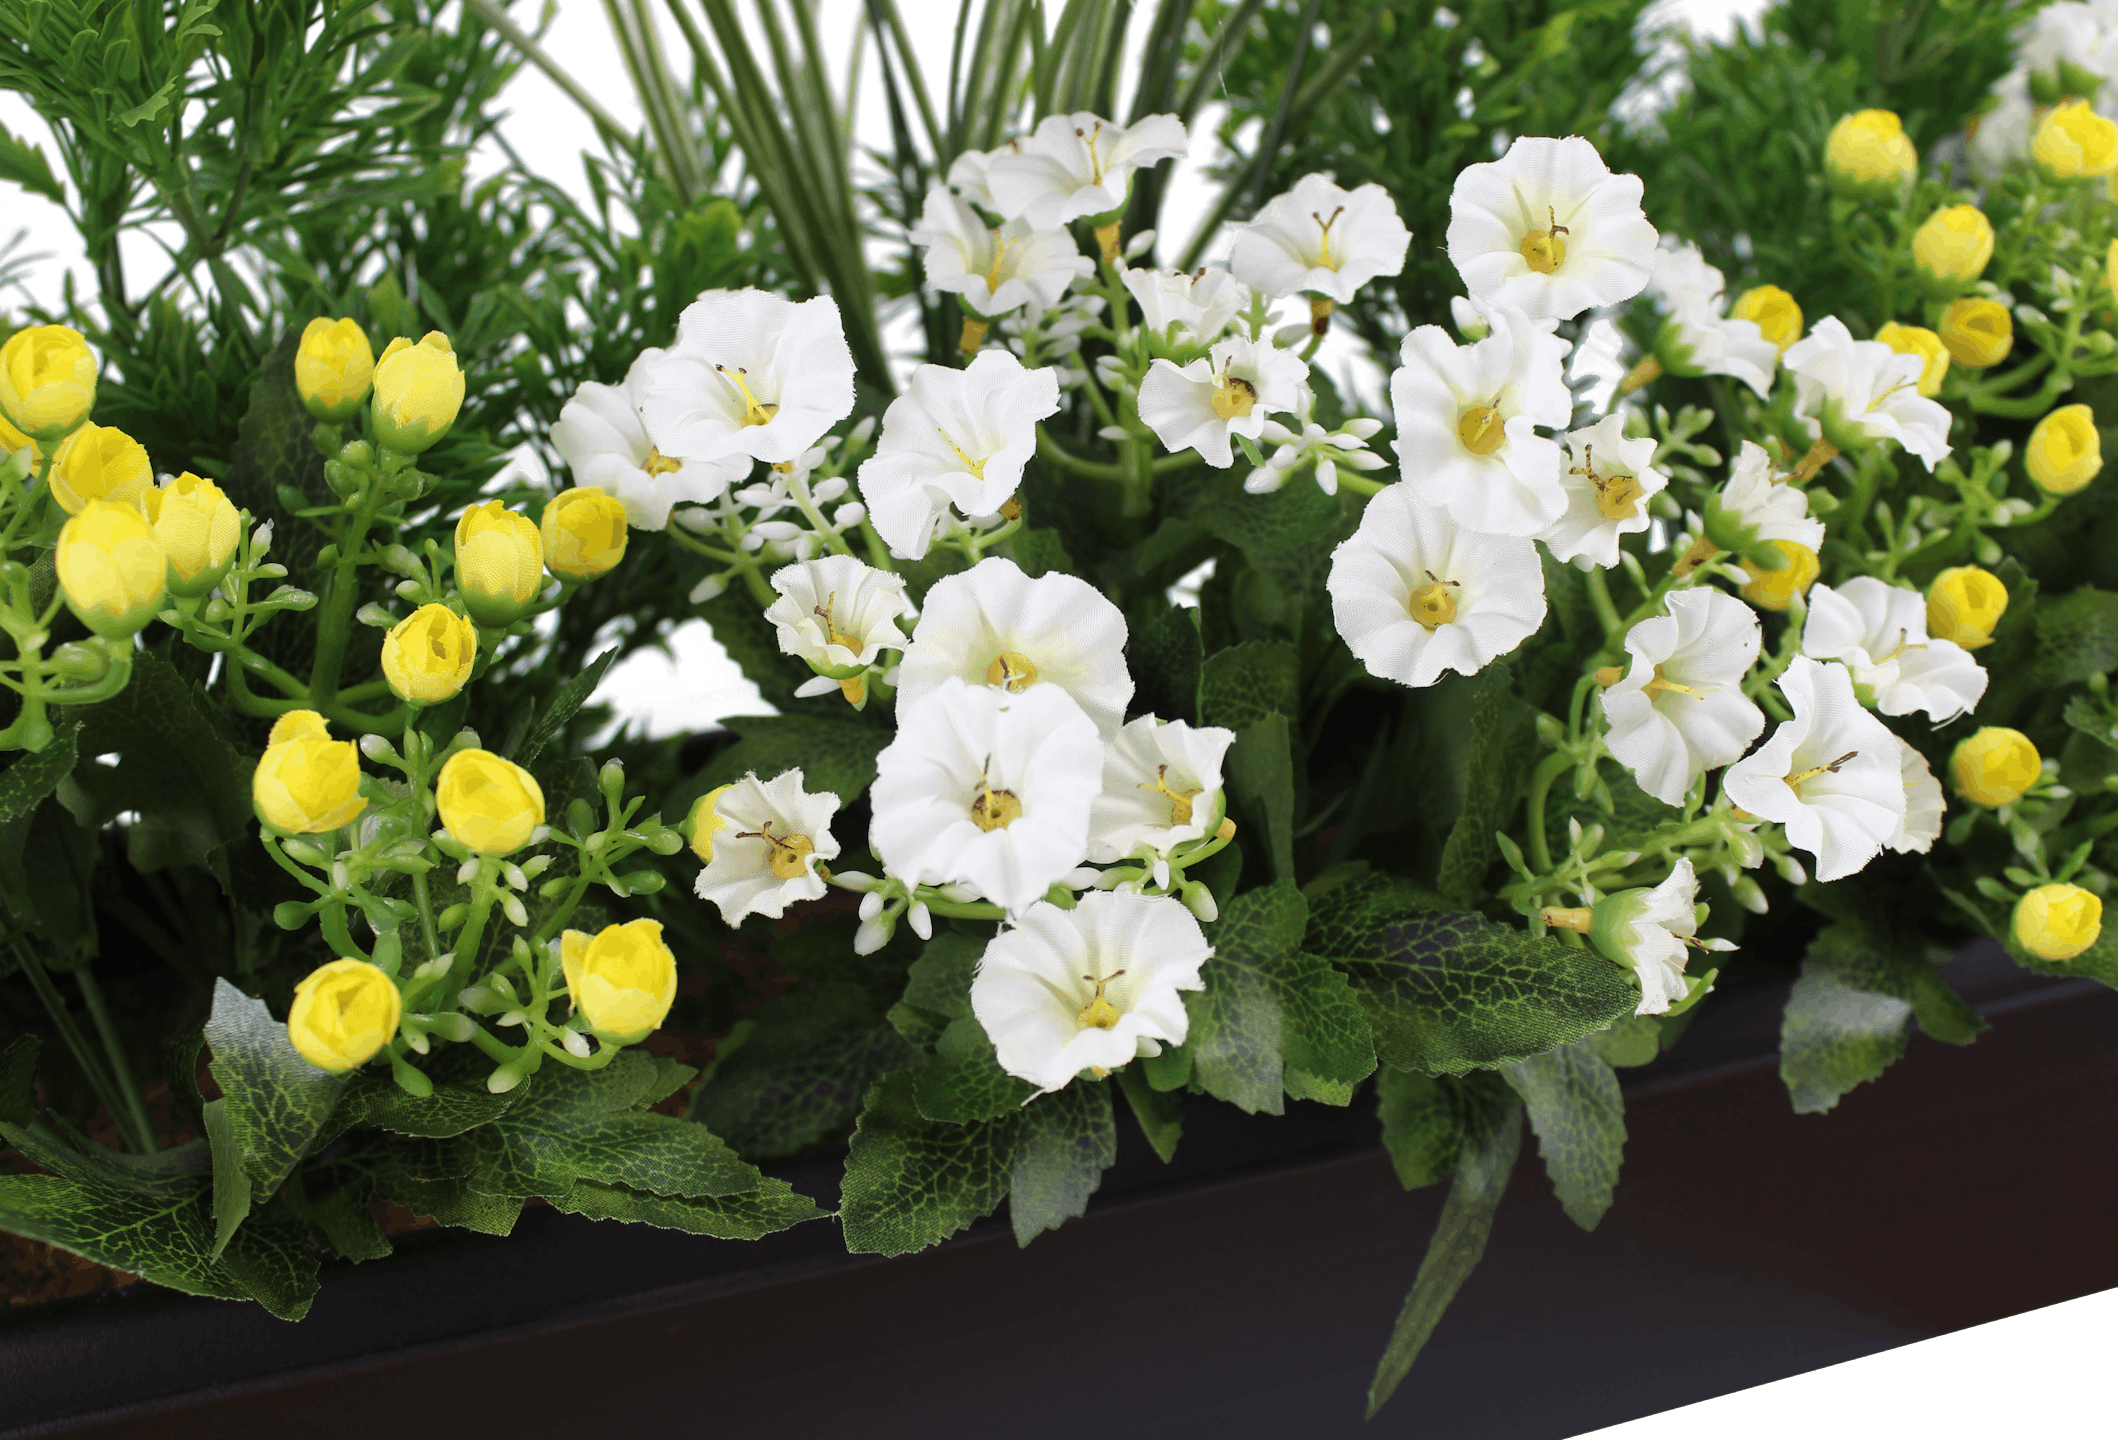 Artificial alluring allium window box close up on white flowers